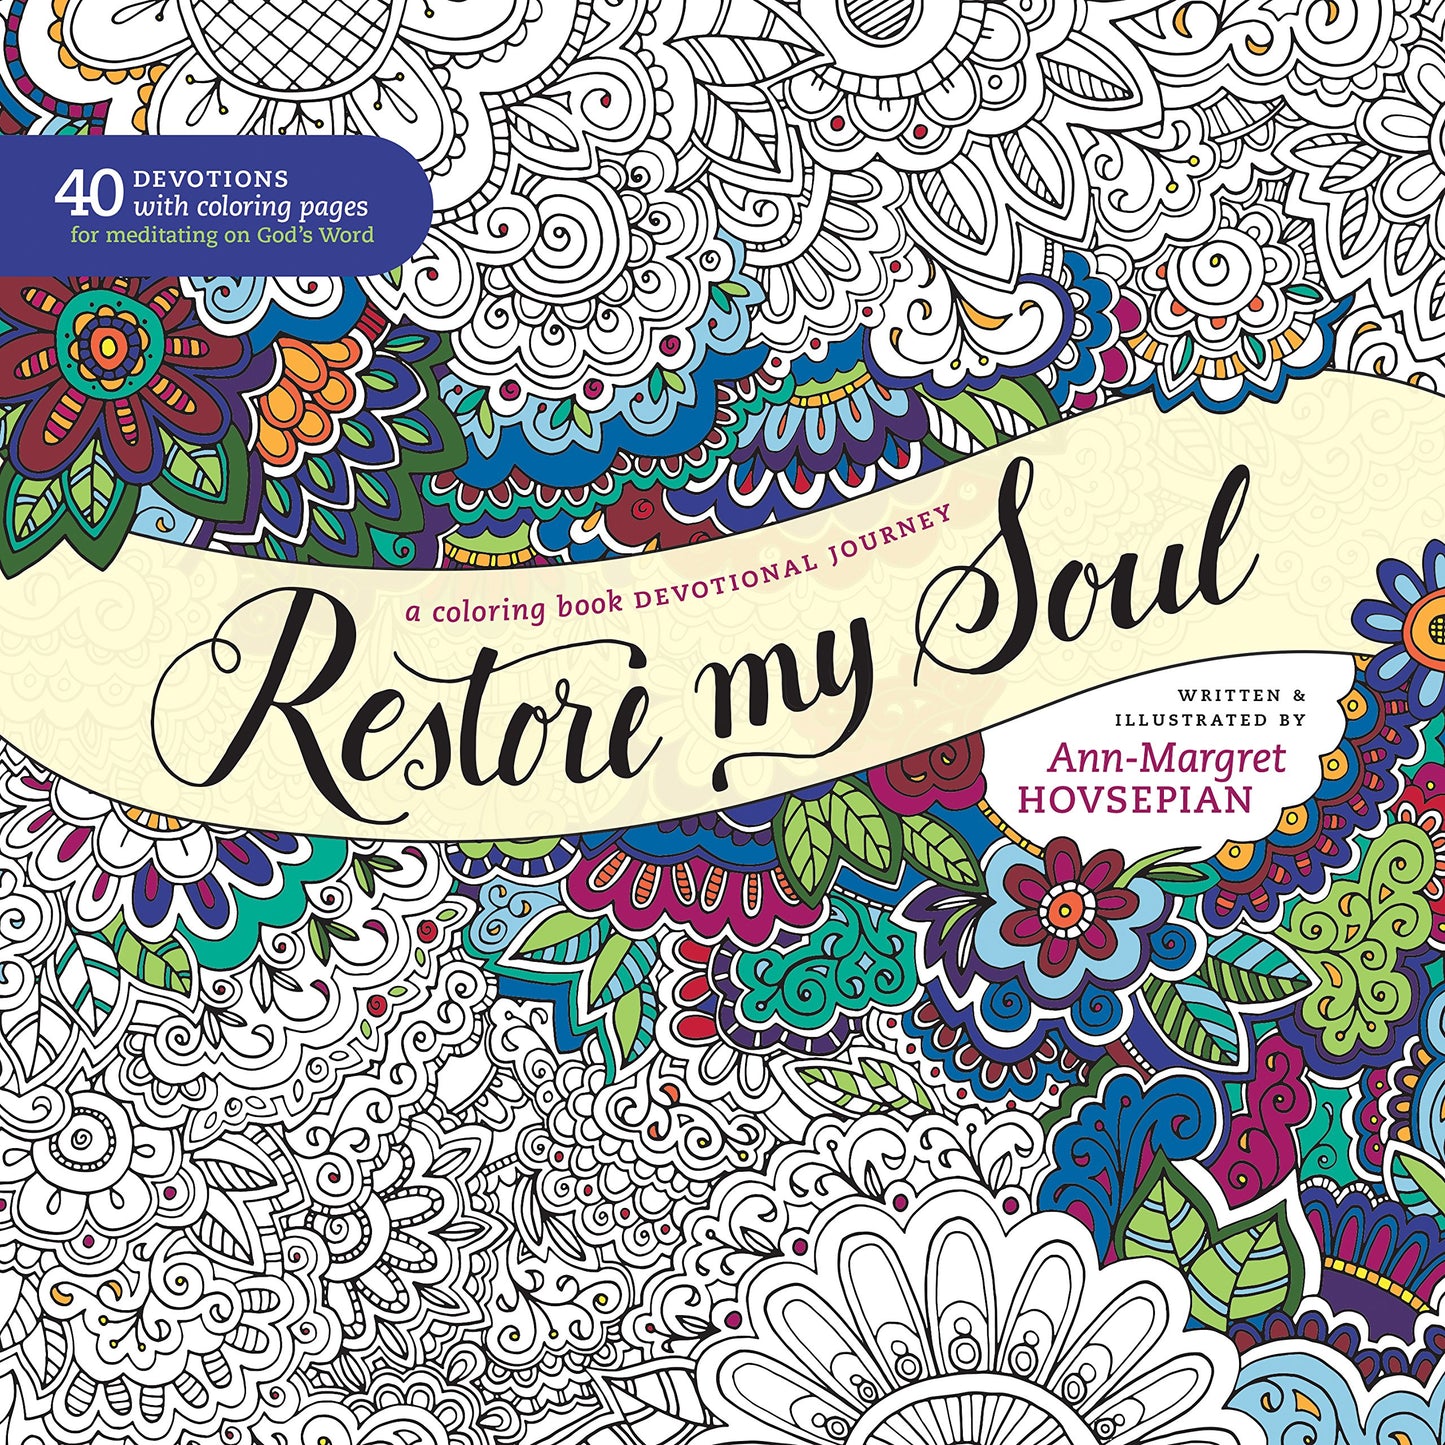 Restore My Soul - devotional colouring book